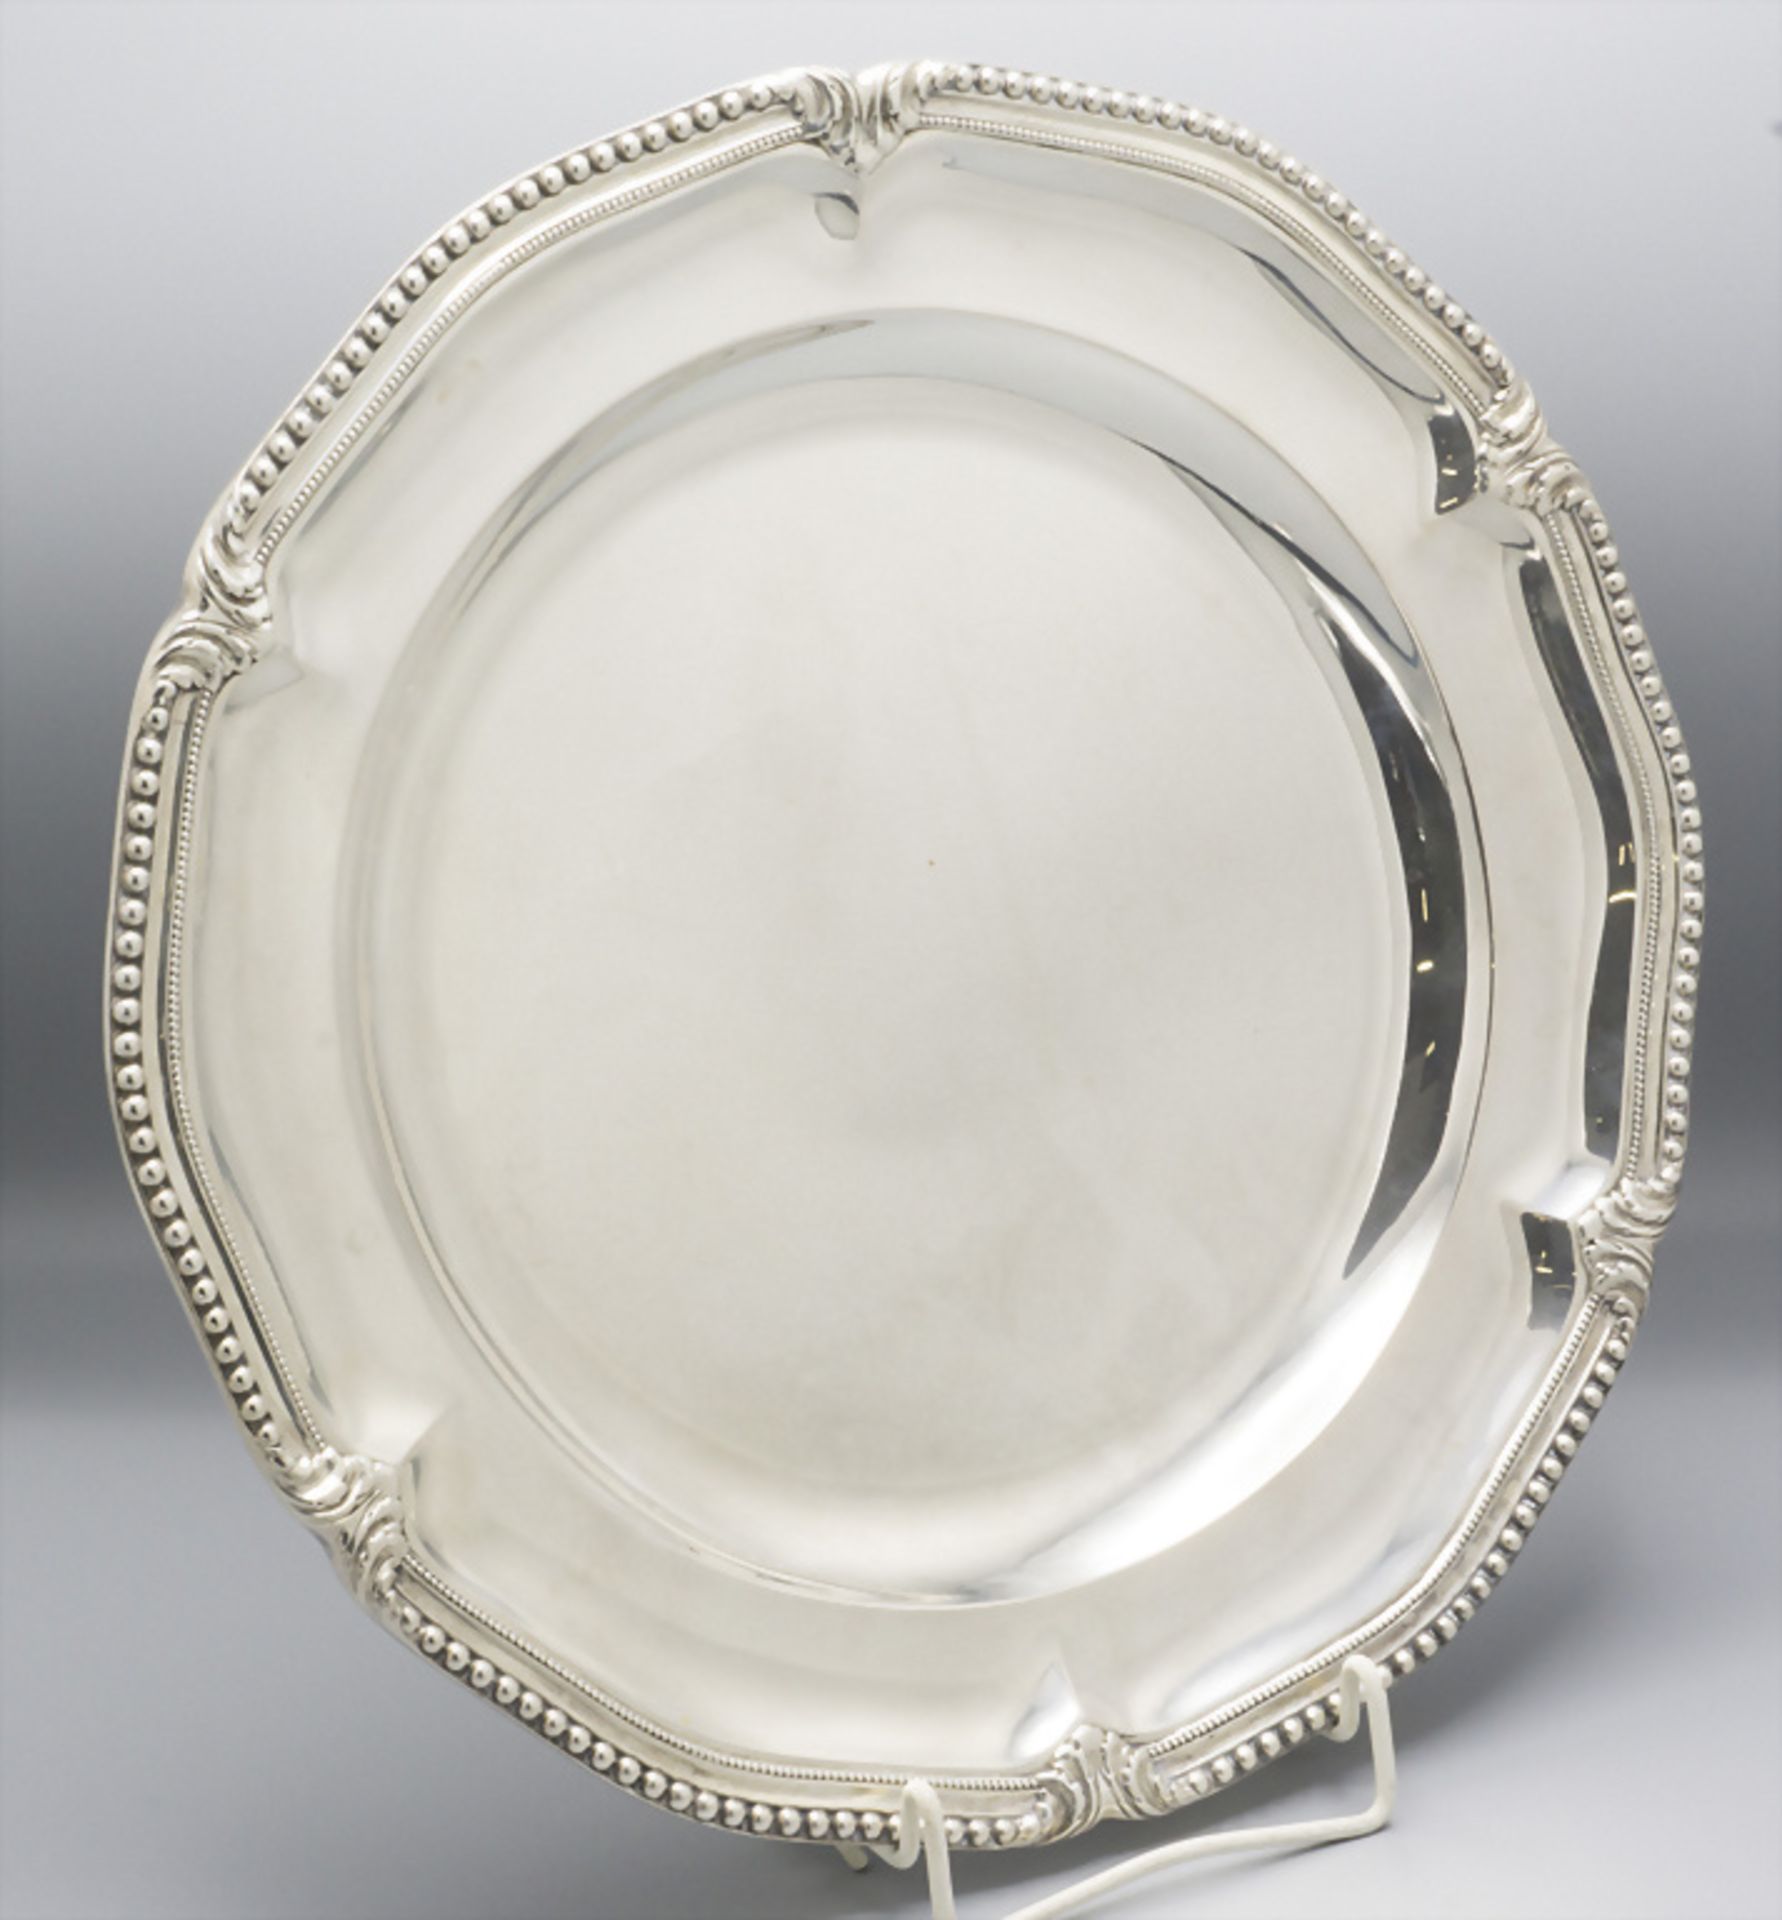 Silberplatte / A silver plate